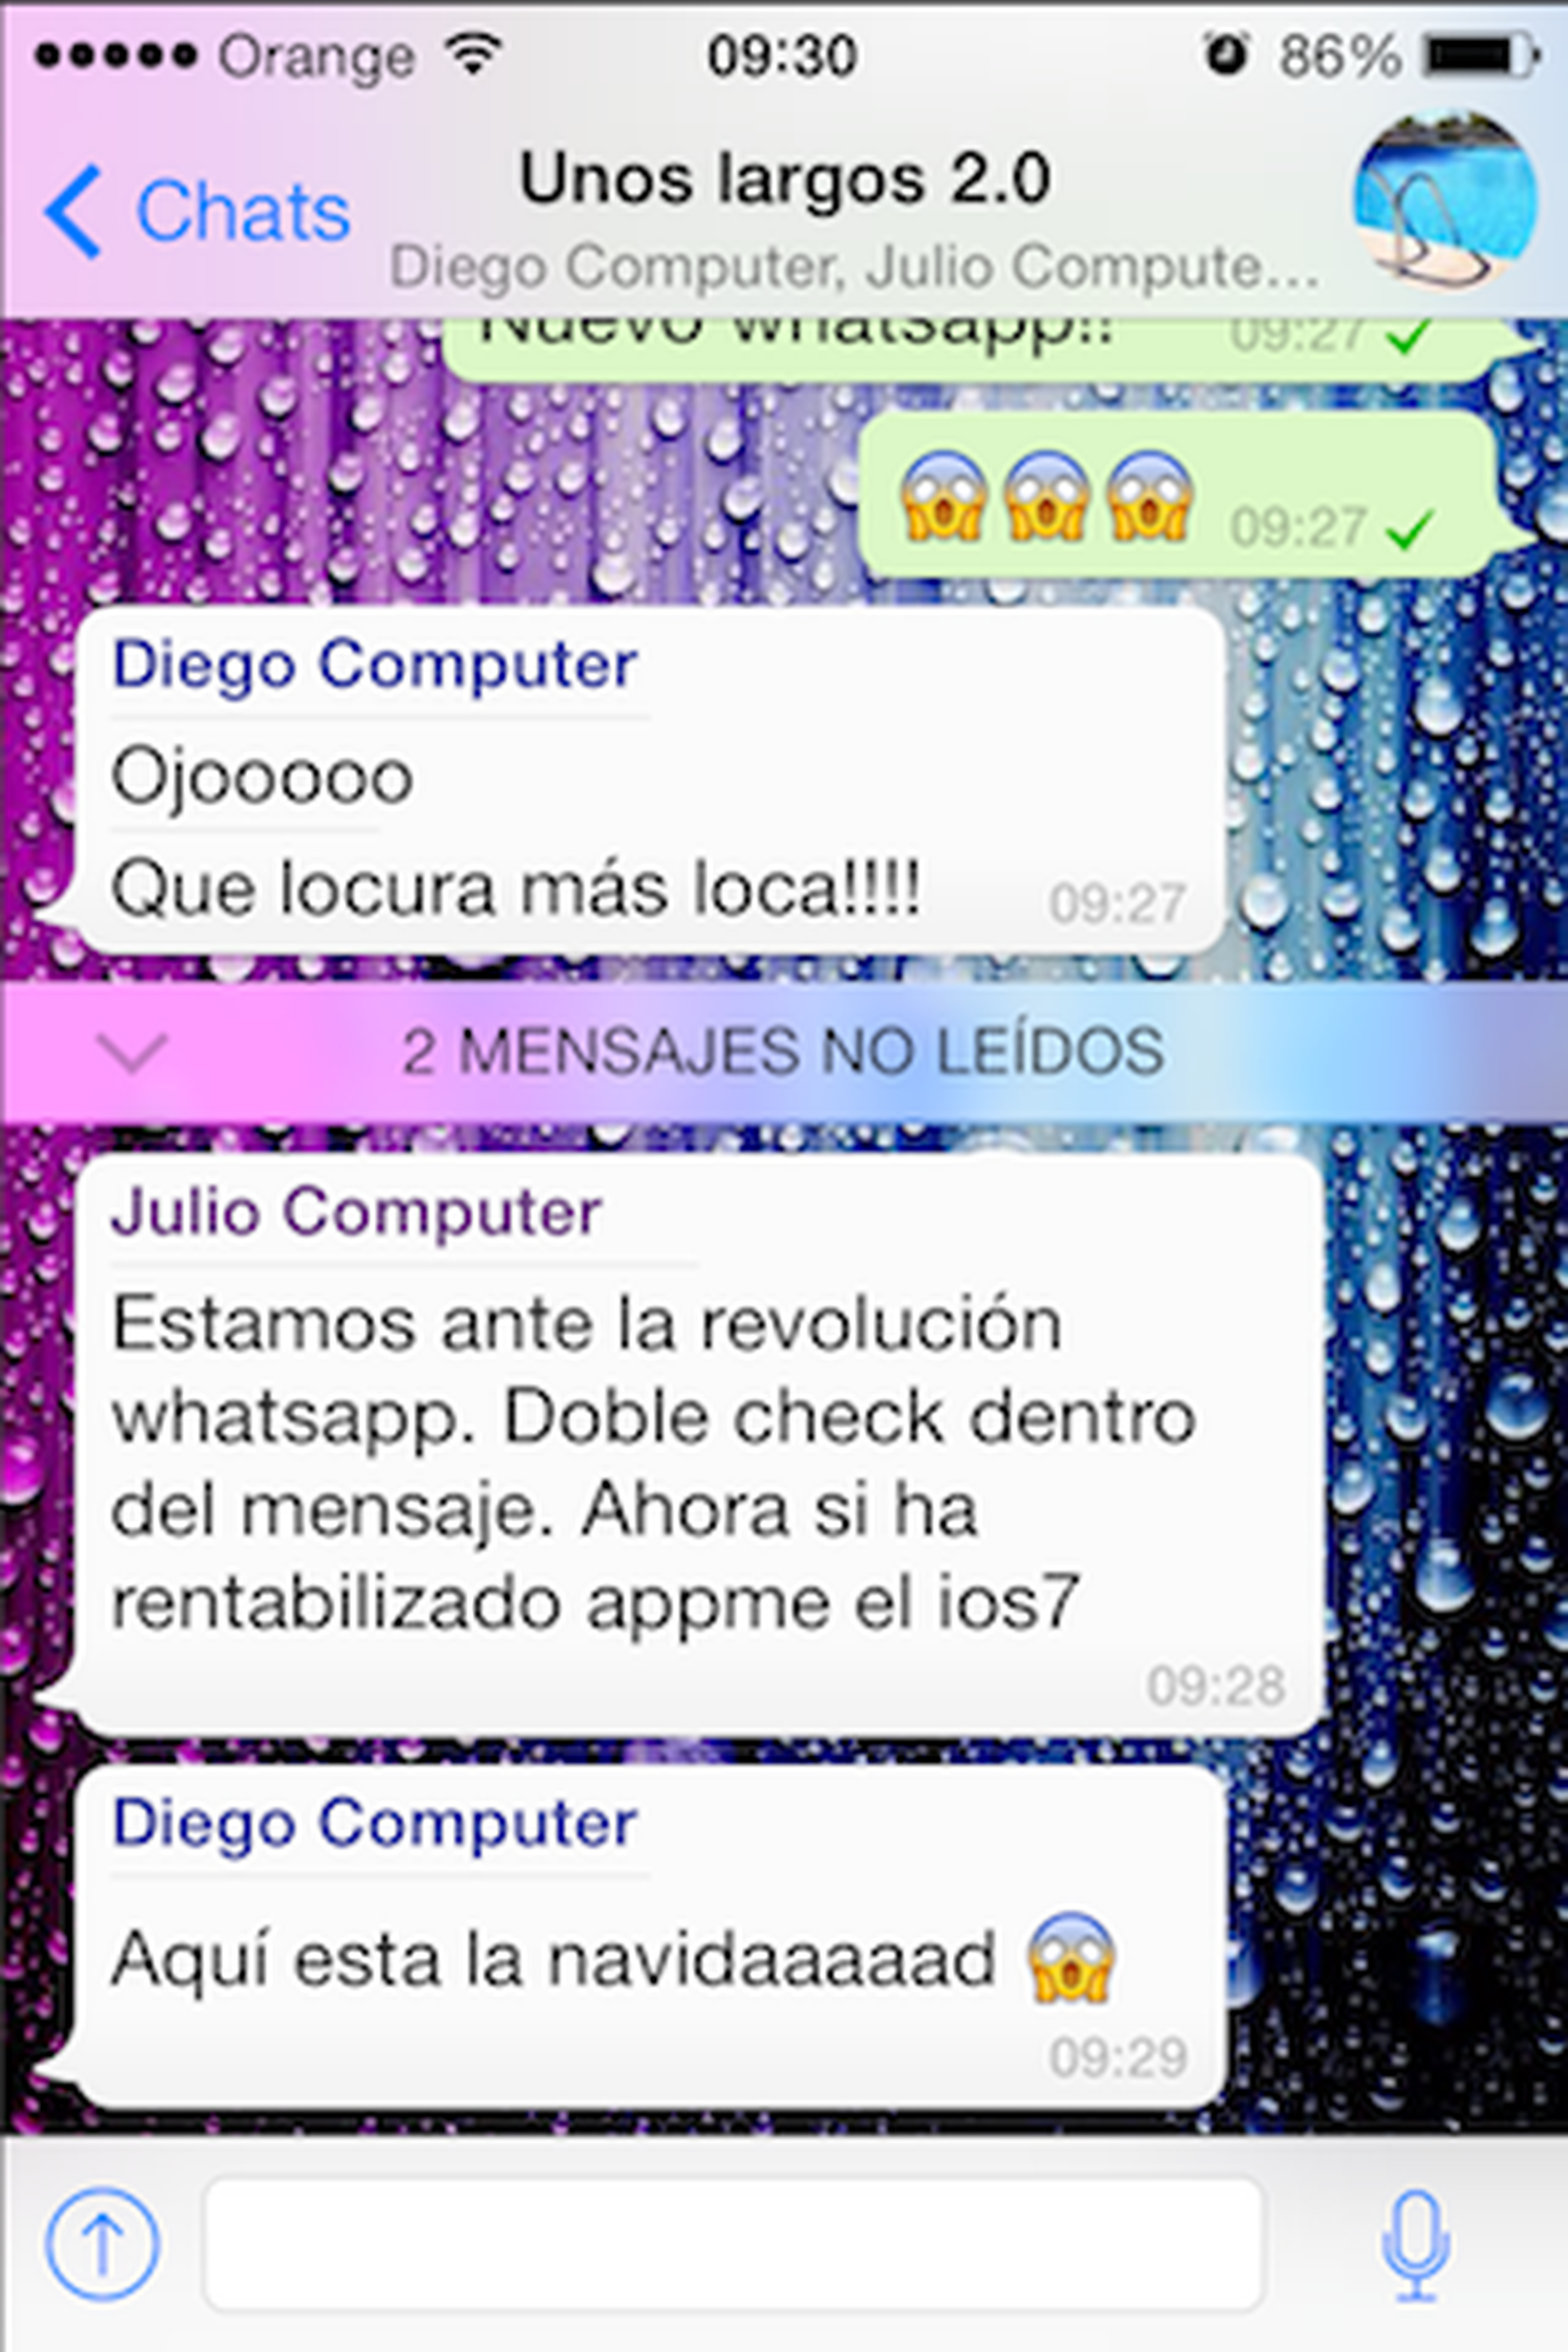 mensajes no leidos WhatsApp iOS 7